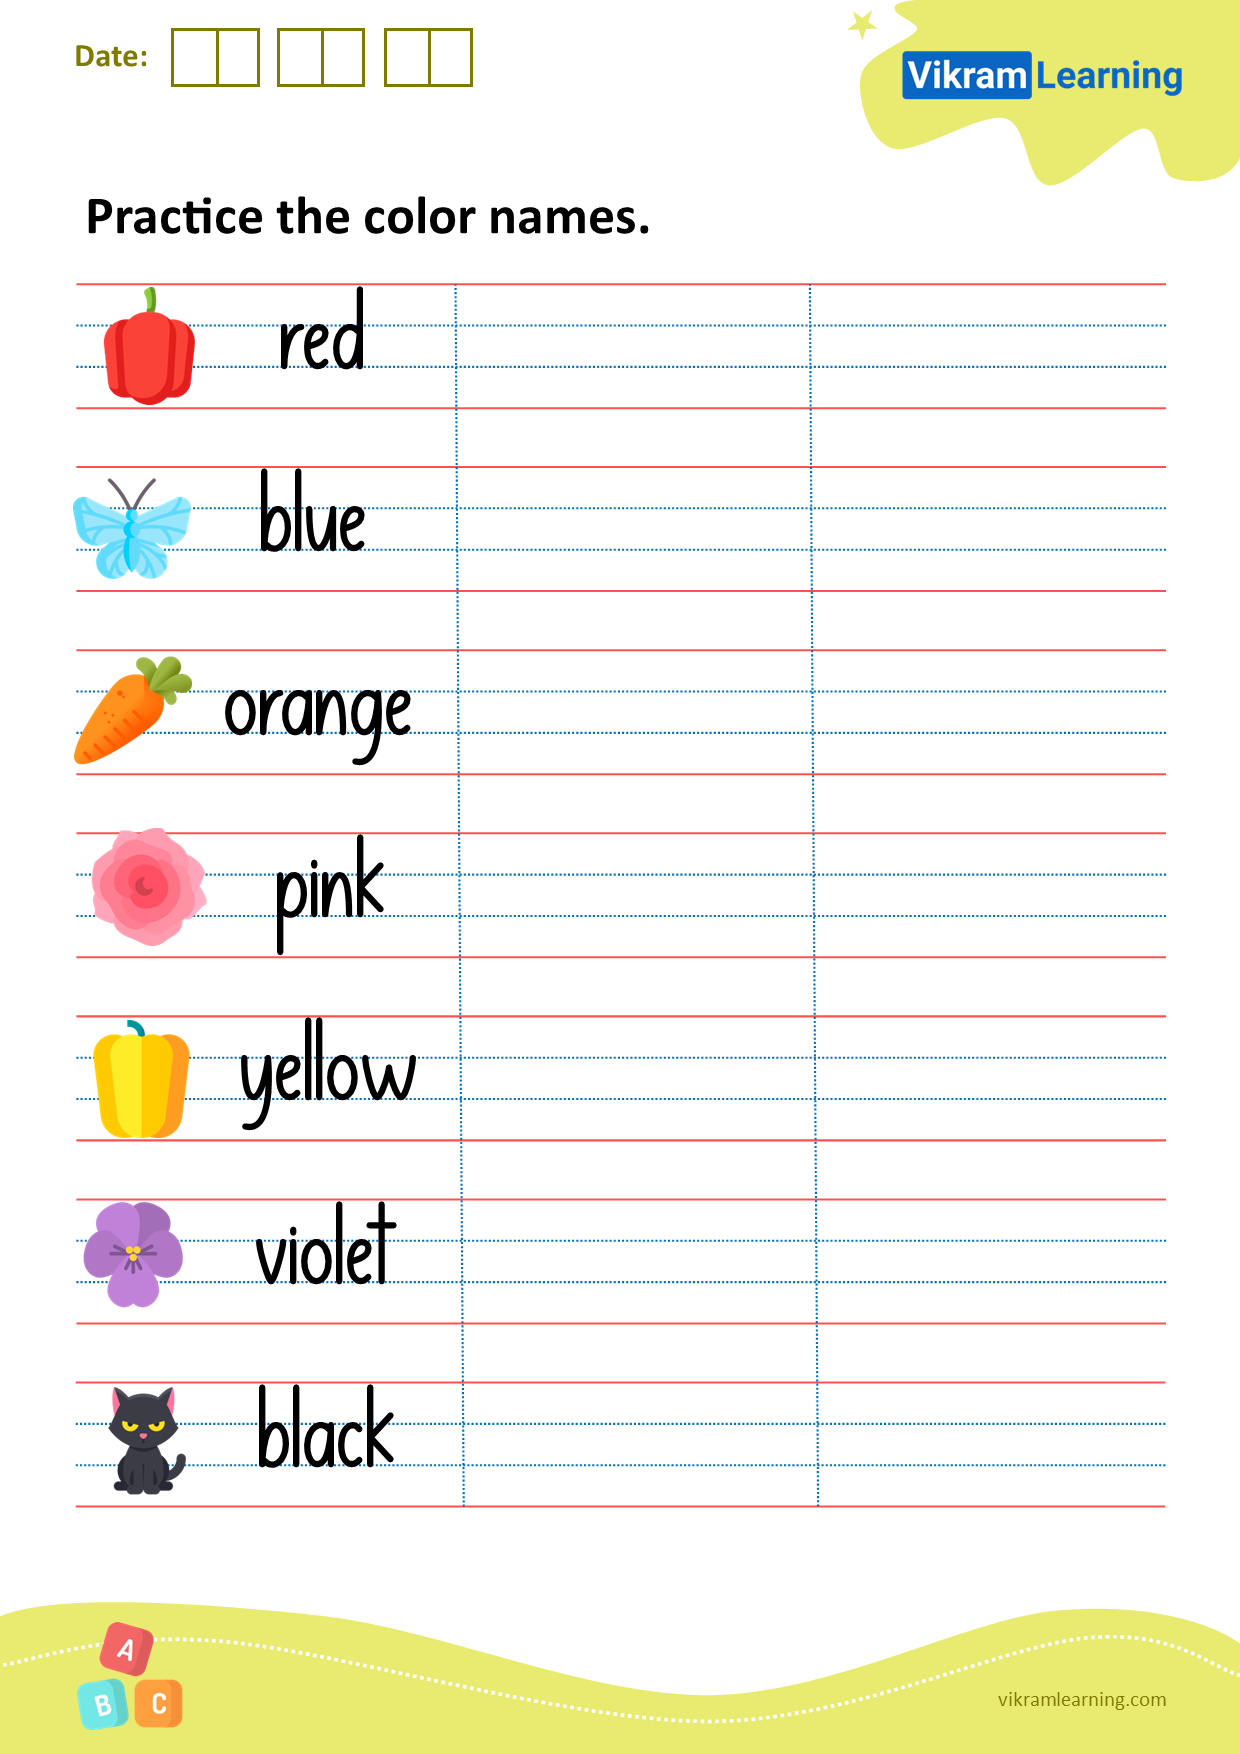 download-practice-the-color-names-worksheets-vikramlearning